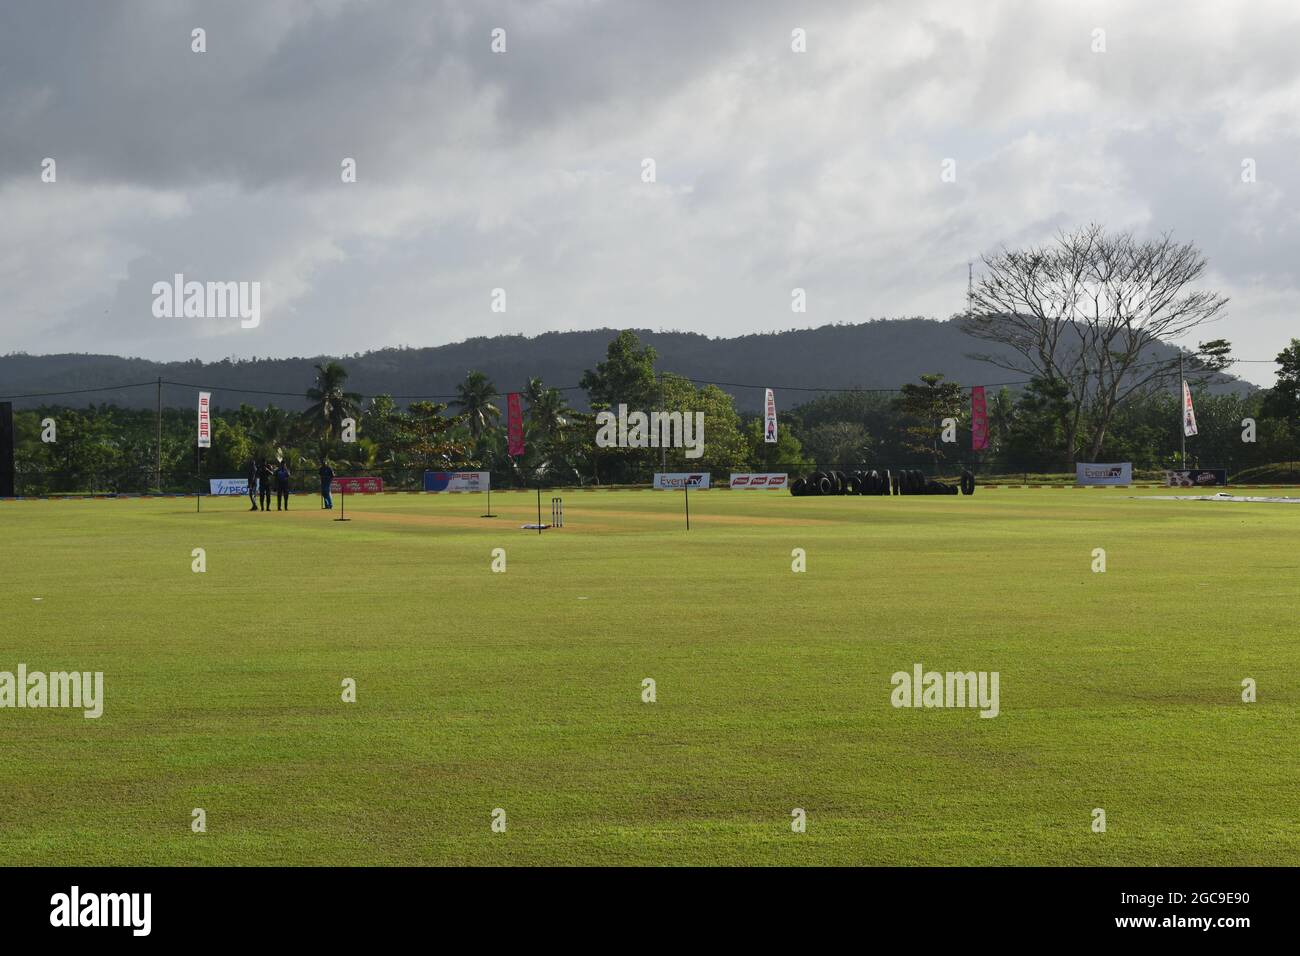 Le pittoresque terrain de cricket de l'Army Ordinance. Dombagode. Sri Lanka. Banque D'Images